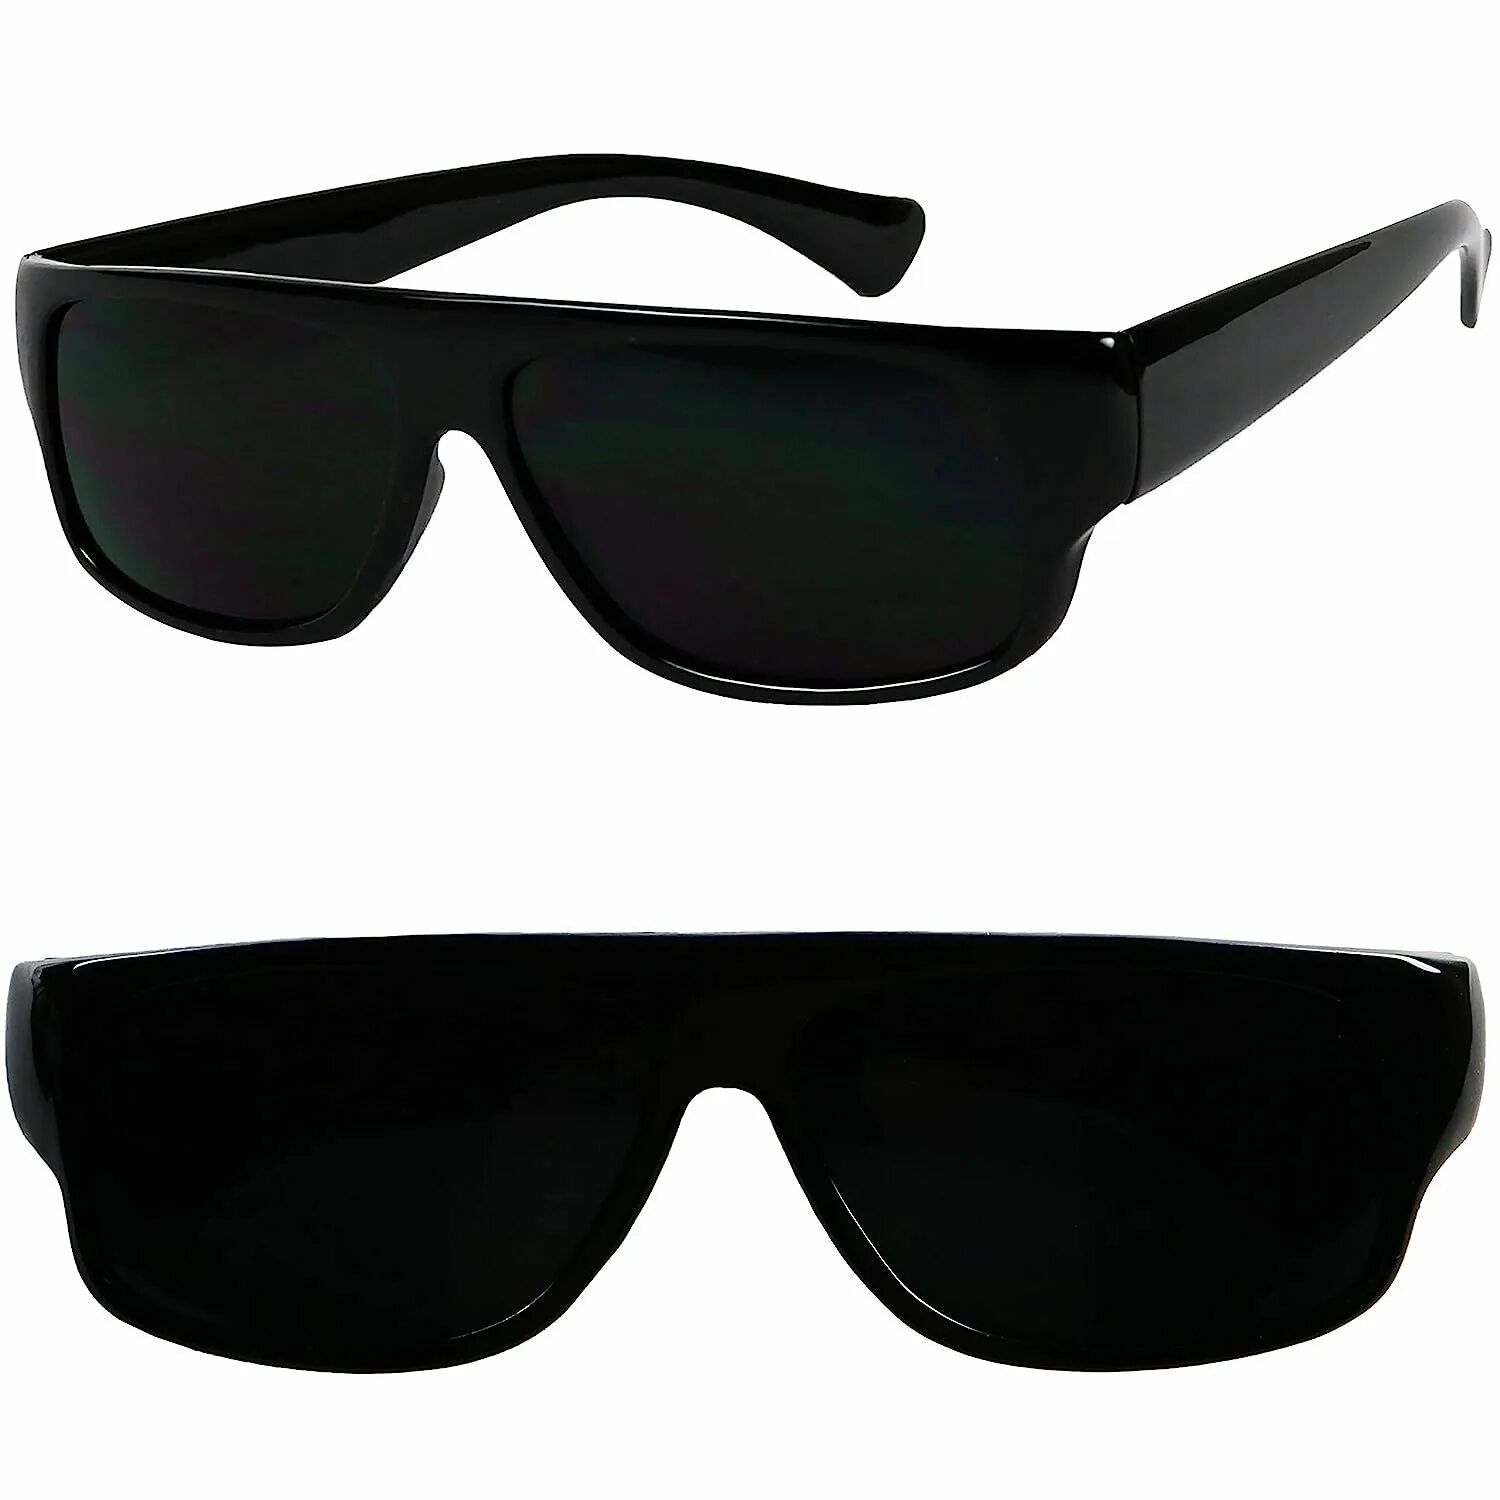 Очки locs Eazy e. Очки Cyclone Black Sunglasses. Armani UV Protection очки. Очки корда сунглассес Классик. Купить затемненные очки